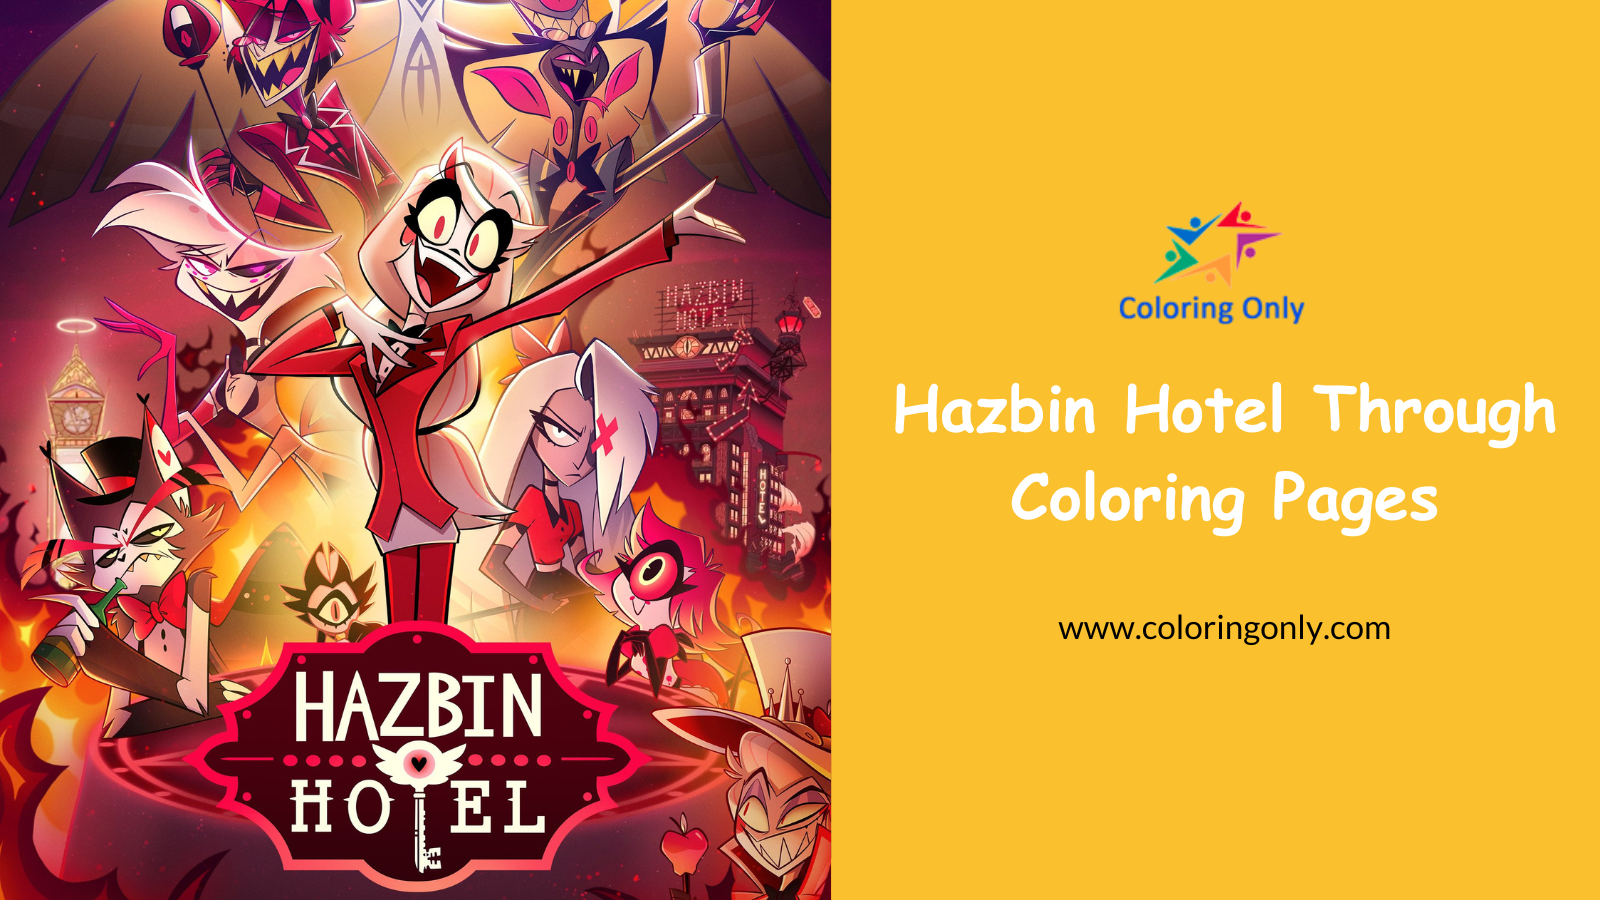 Hazbin Hotel Through Coloring Pages